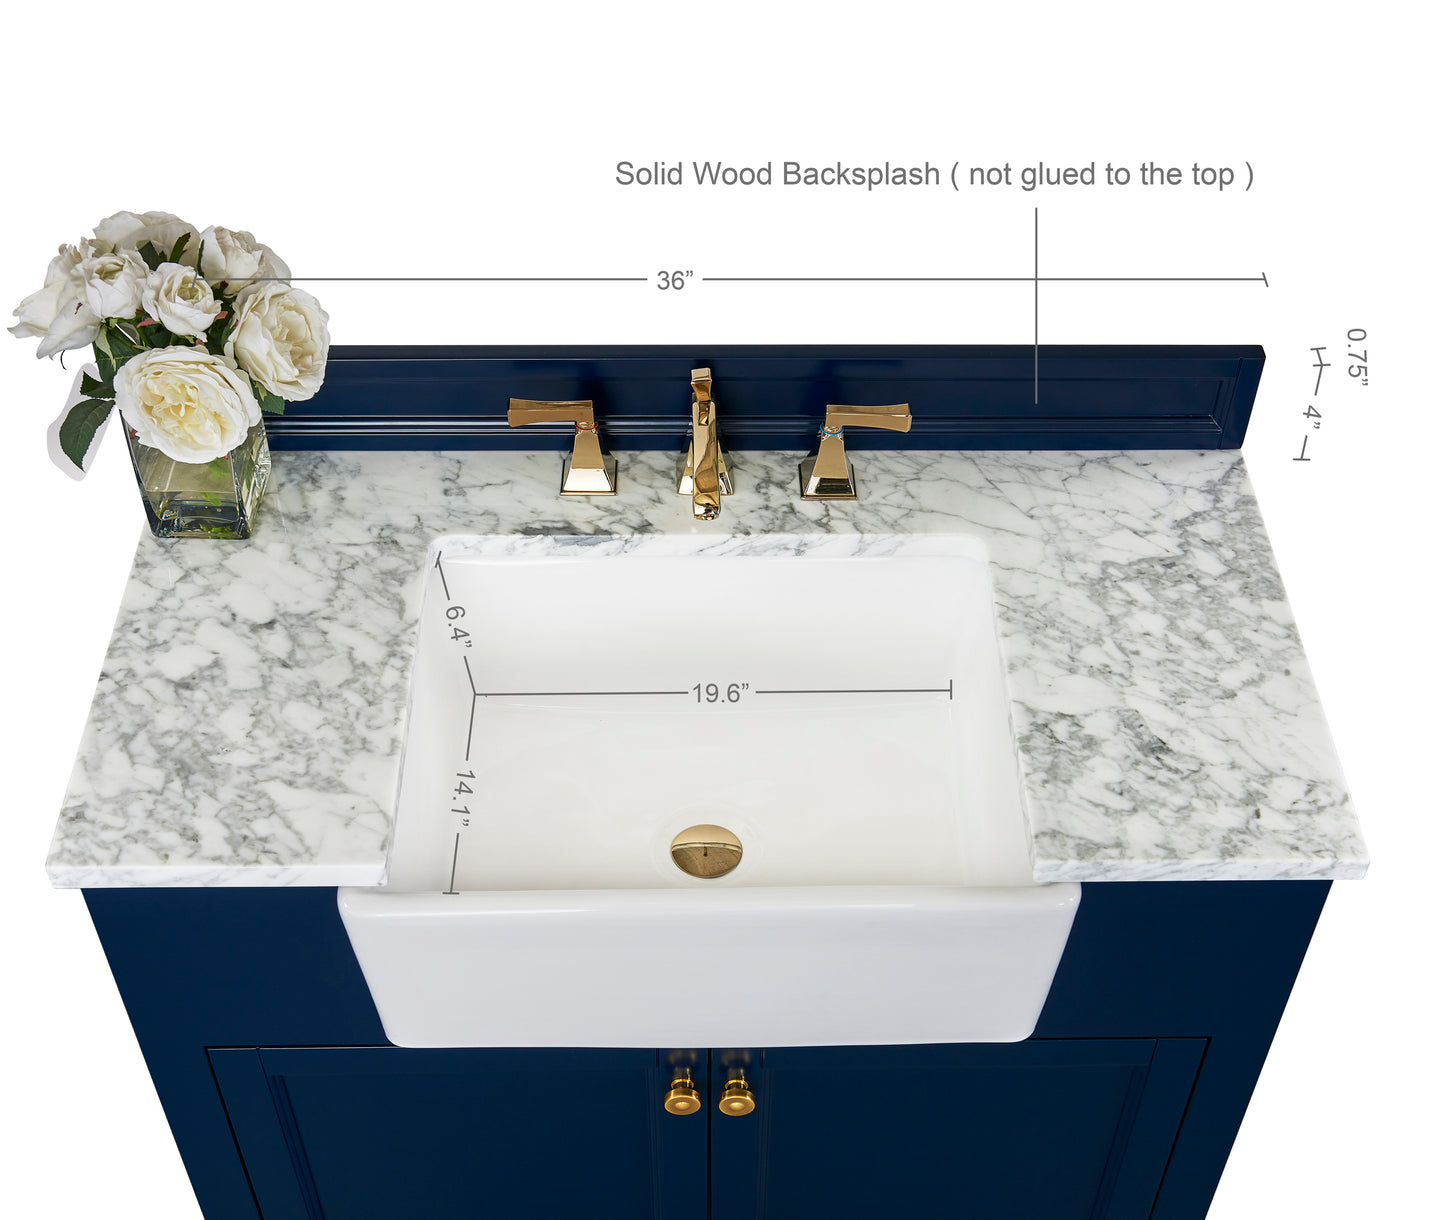 Adeline 36" Bath Vanity Set - Ancerre Designs